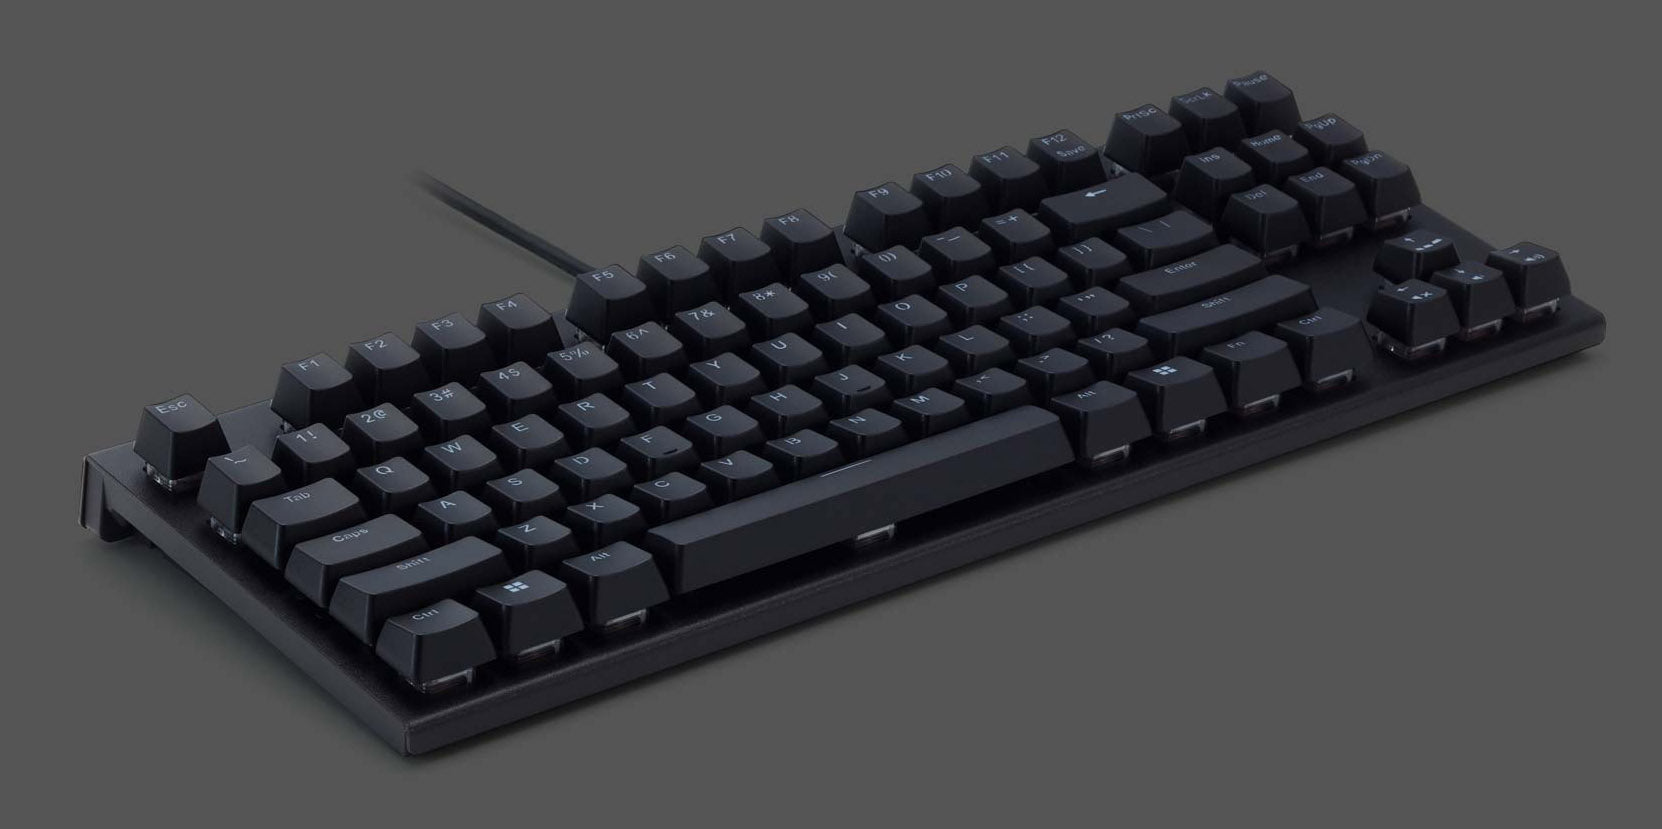 Realforce GX1 Black TKL RGB Double Shot ABS Mechanical Keyboard